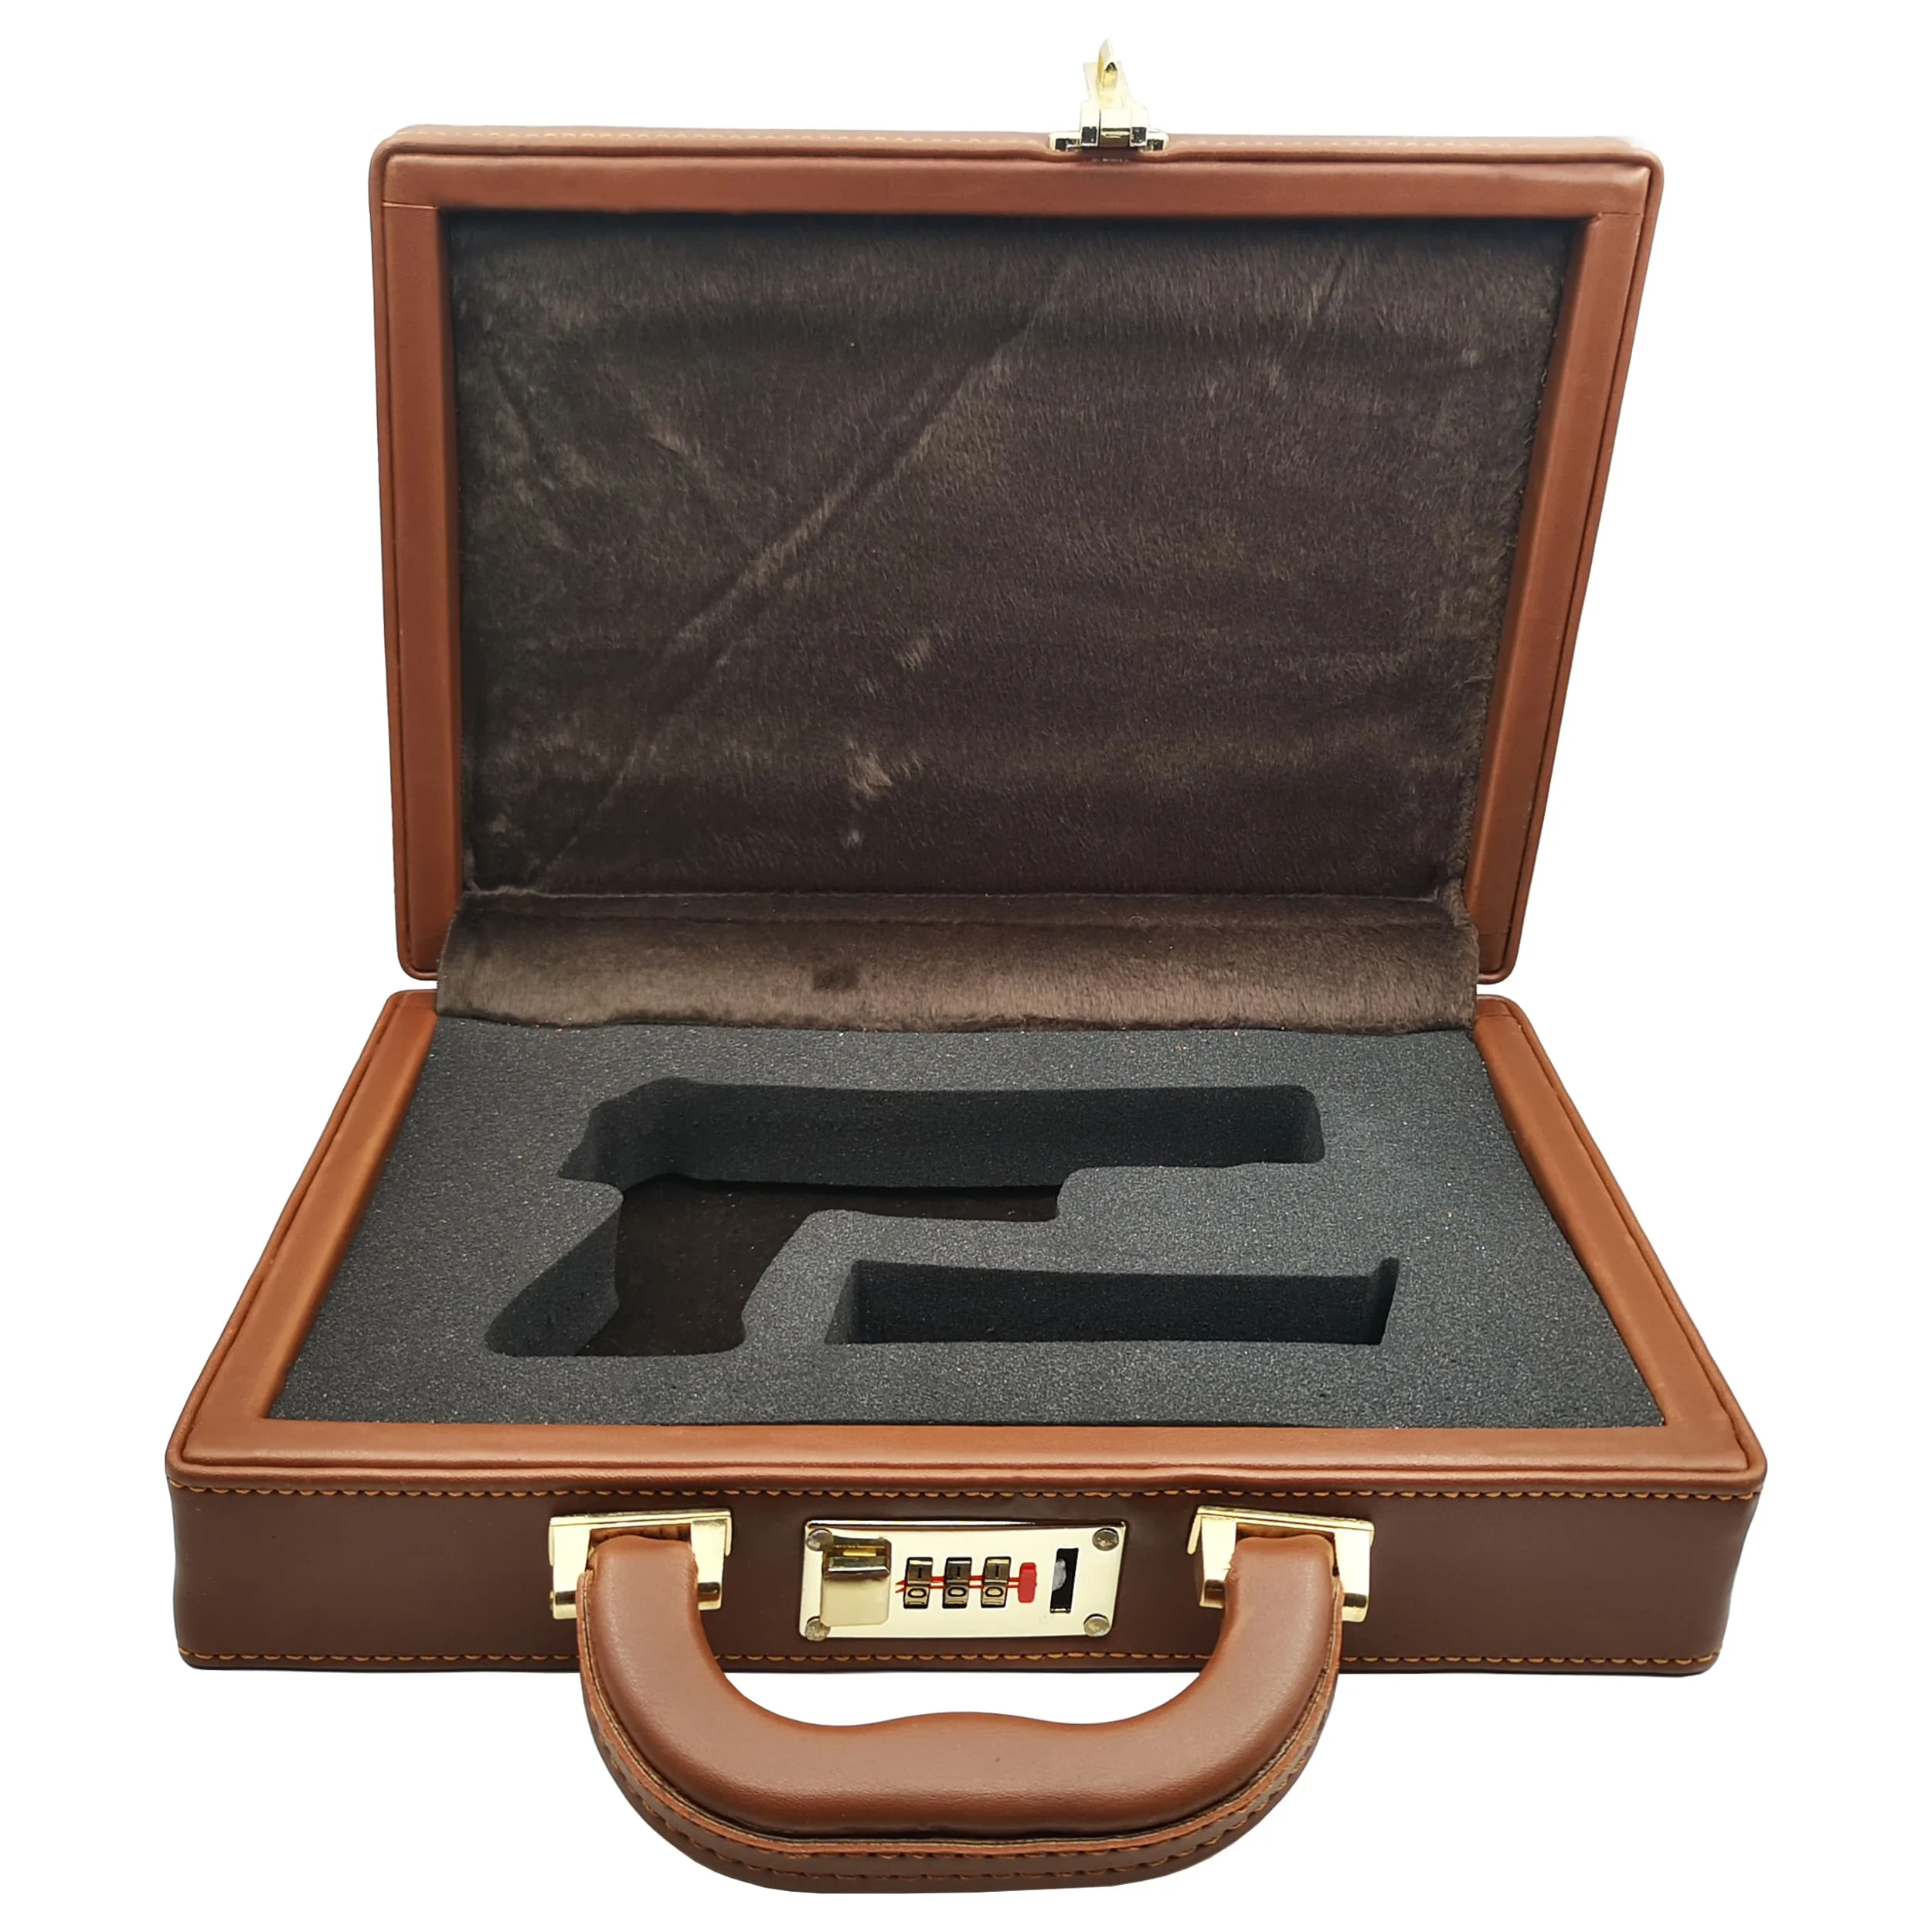 

Glock 19 Special Leather Gun Case Bond Style Personalized Password Lock System Handgun Carry And Storage Woden Box